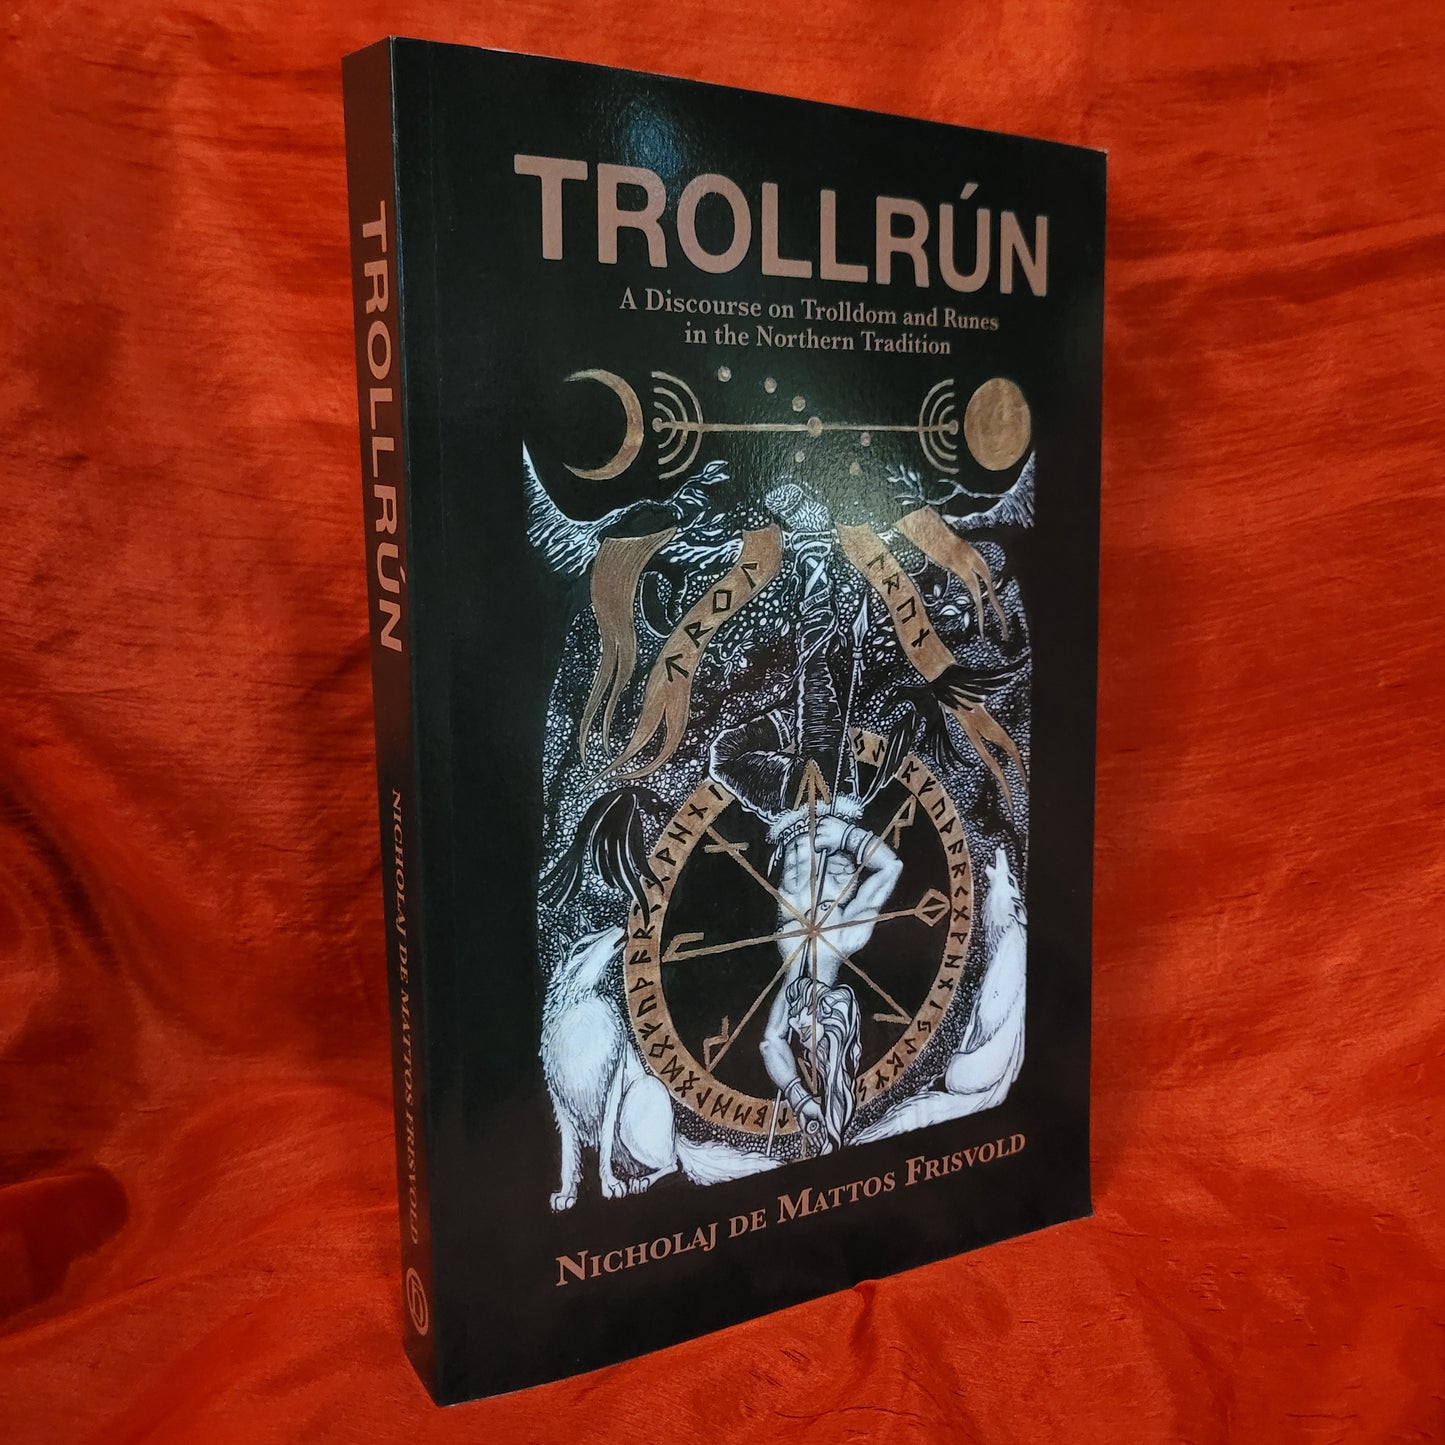 TROLLRÚN: A Discourse on Trolldom and Runes in the Northern Tradition by Nicholaj de Mattos Frisvold (Hadean Press, 2021) Paperback Edition